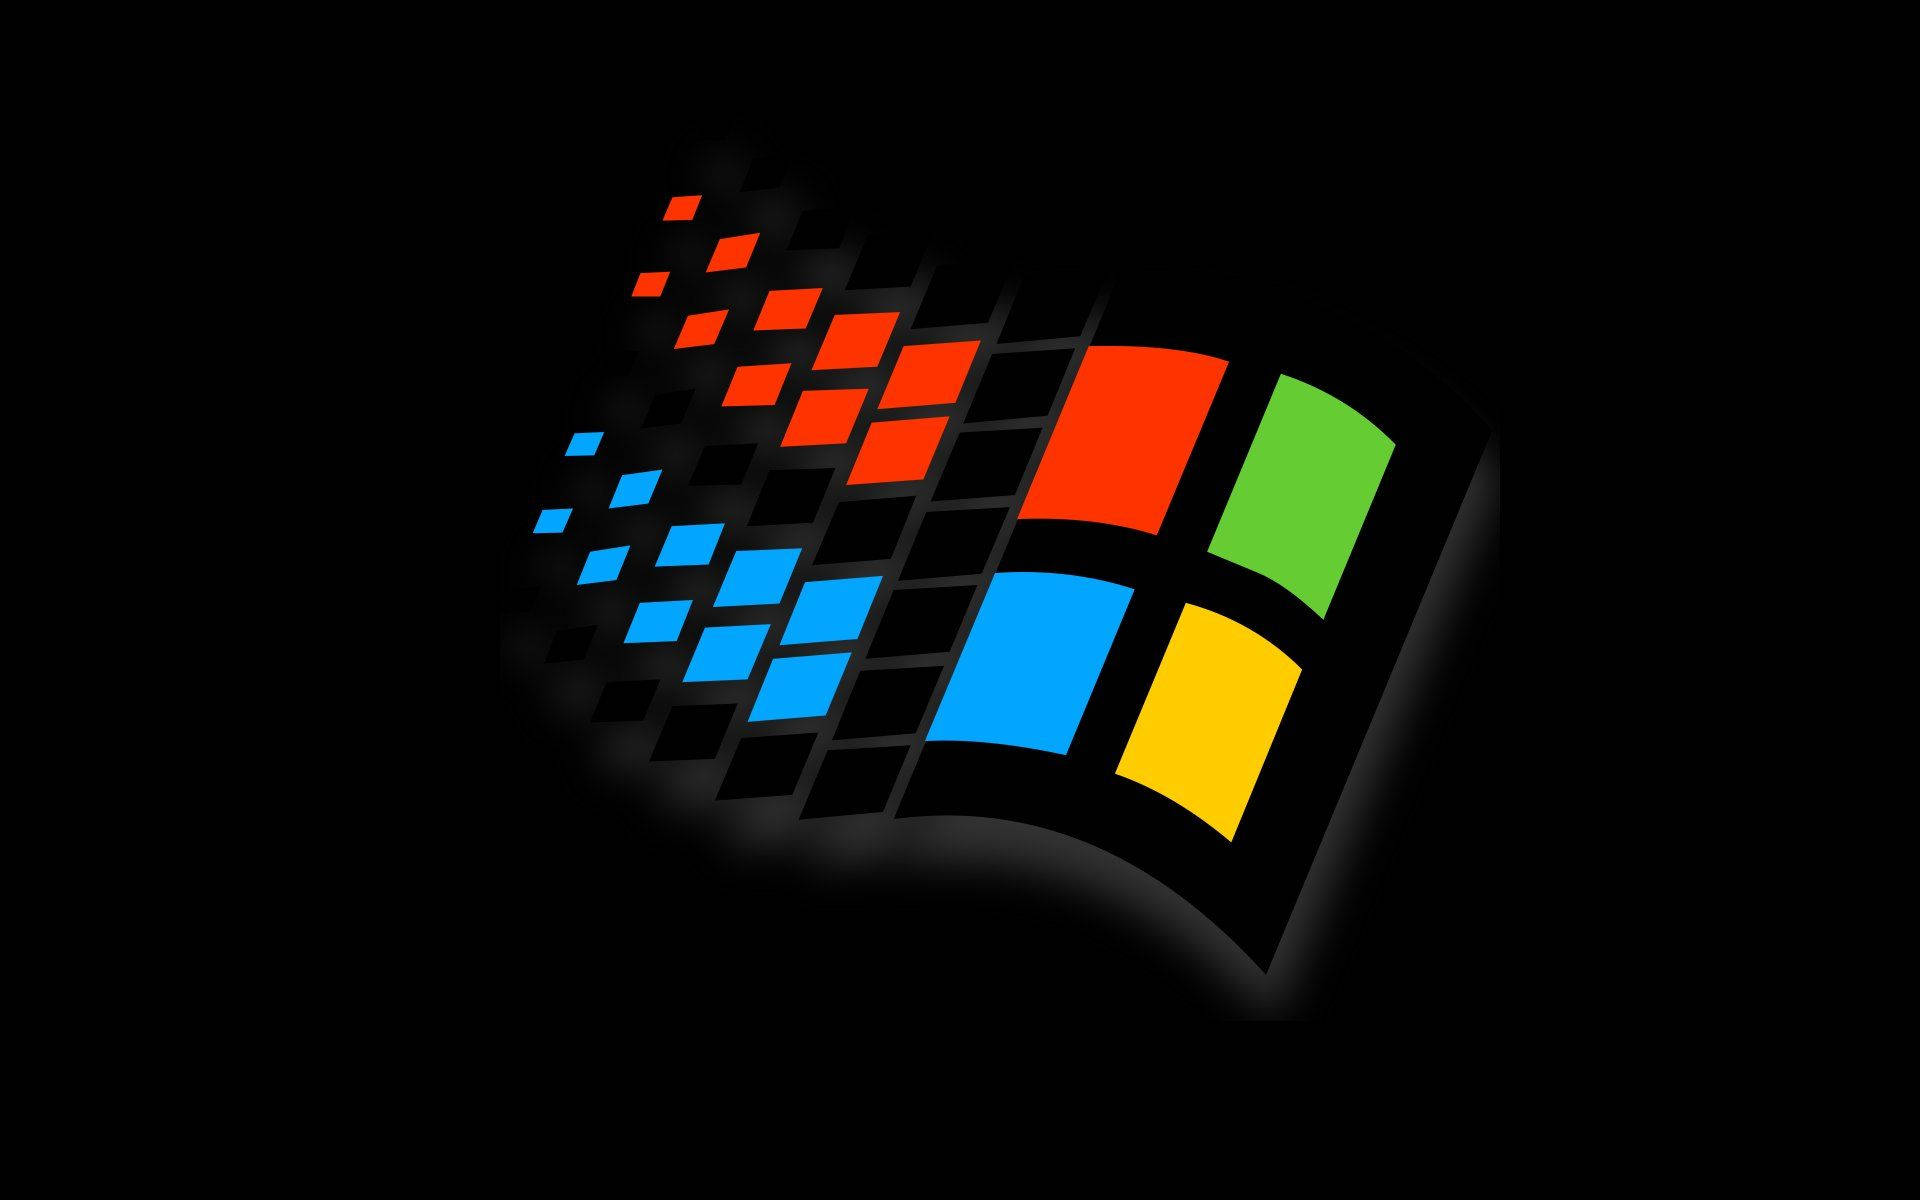 Dispersing Windows 95 Hd Background